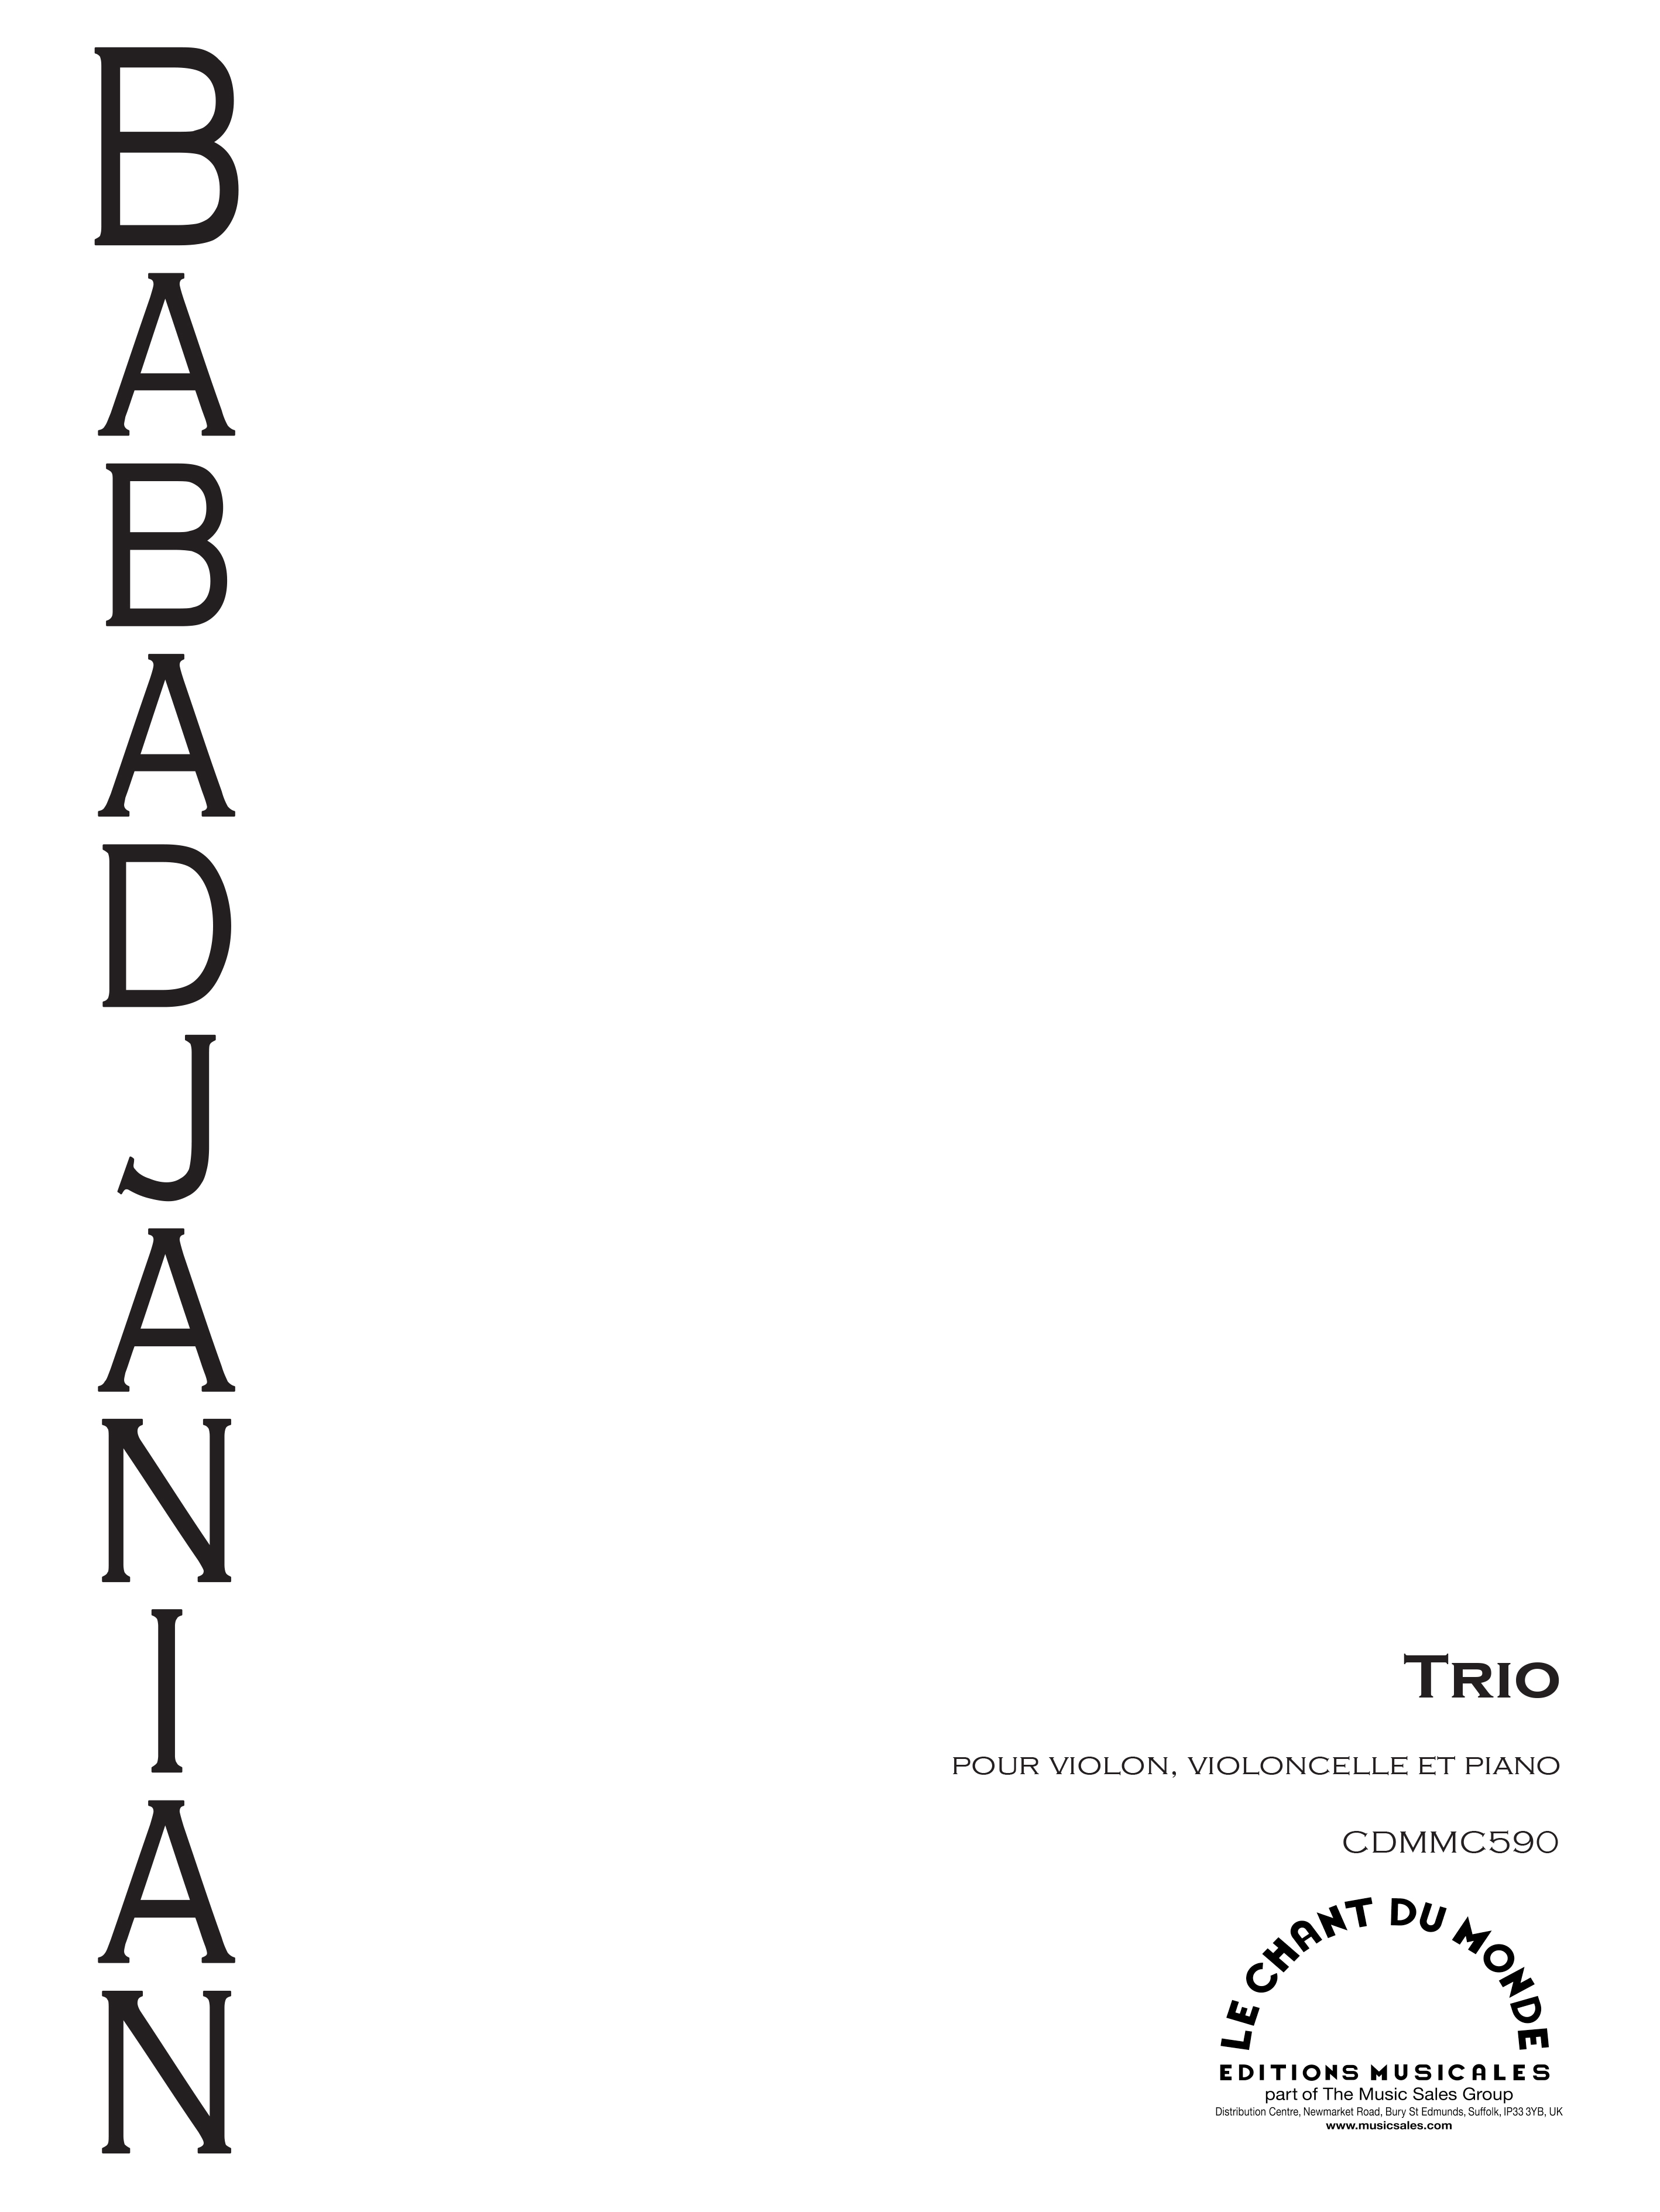 Arno Babajanian: Trio Pour Piano  violon et violoncelle: Piano Trio: